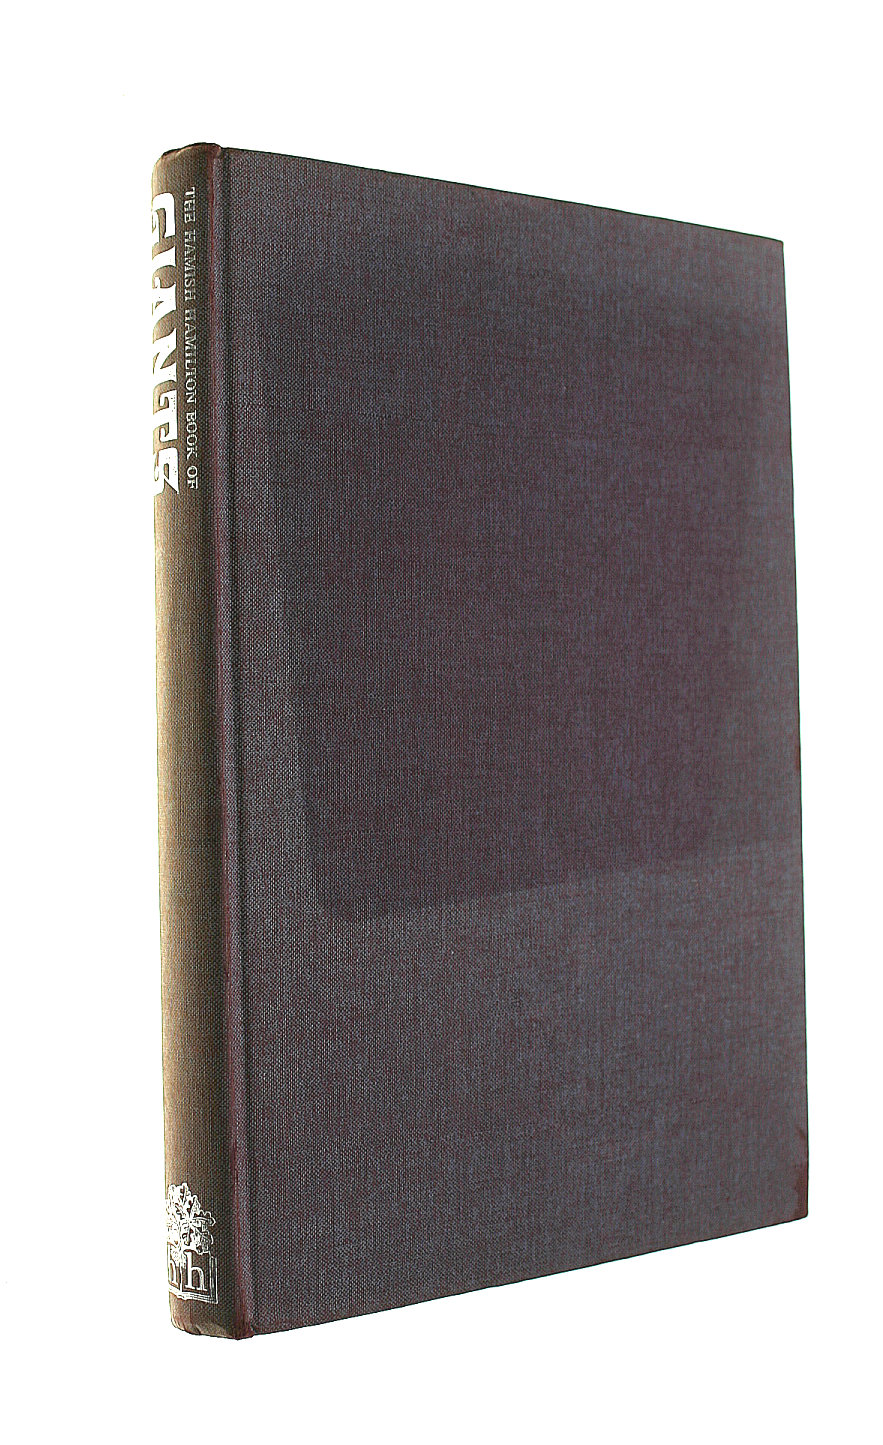 MAYNE, WILLIAM [EDITOR] - Book of Giants